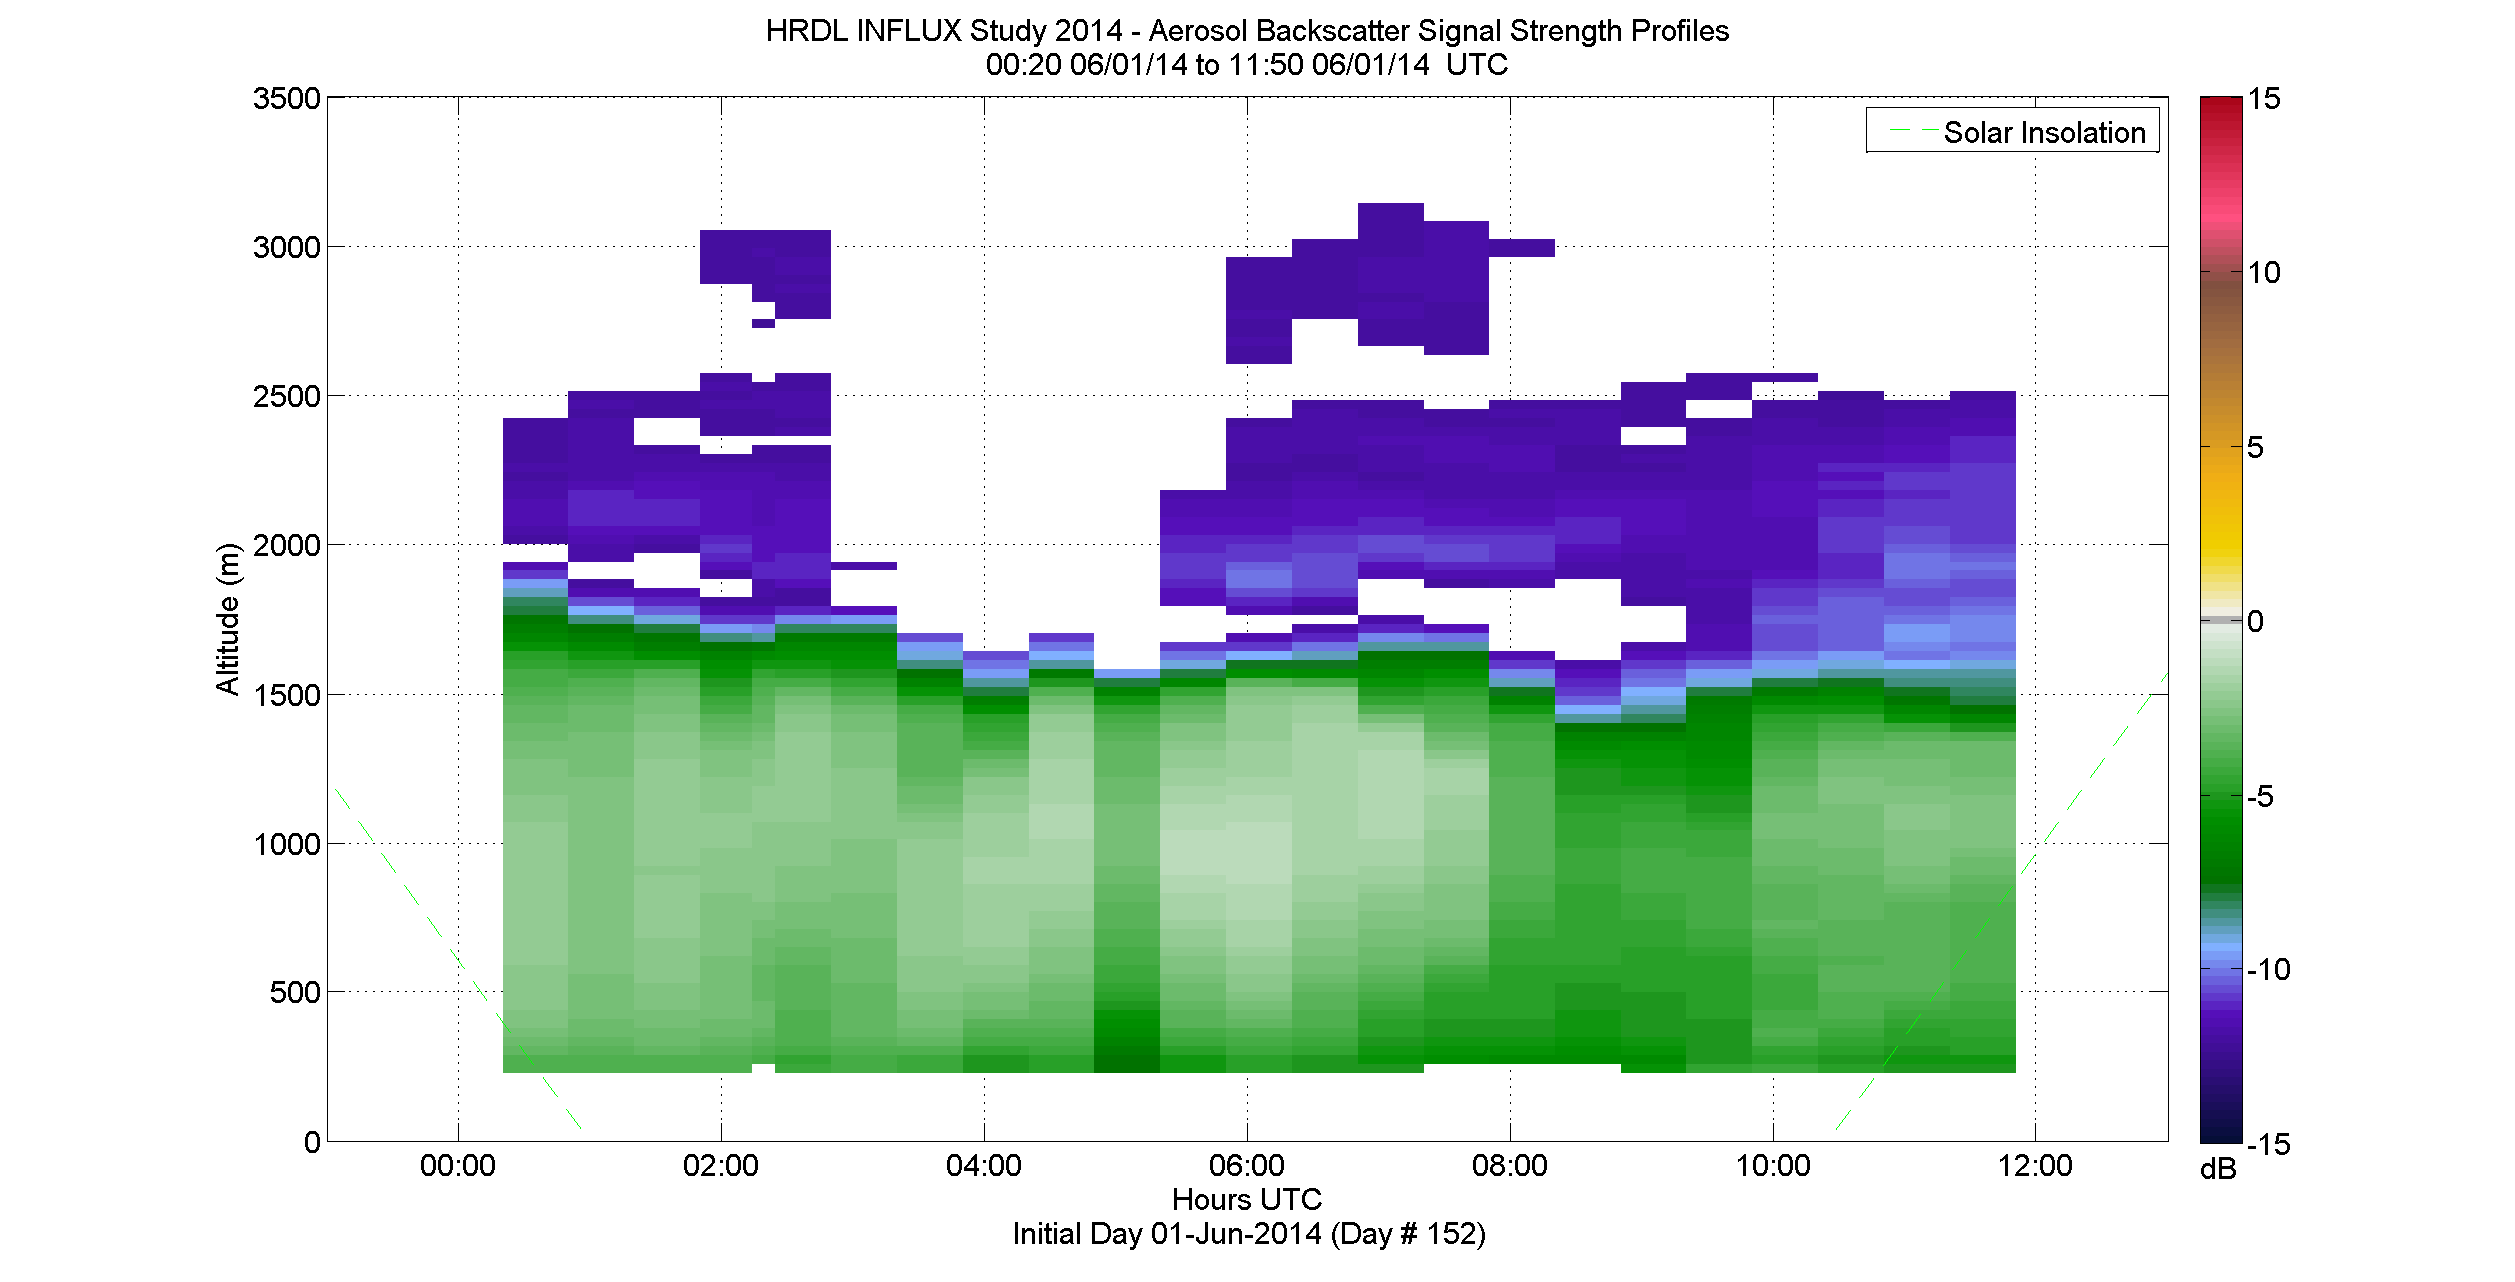 HRDL aerosol backscatter signal strength profile - June 1 am